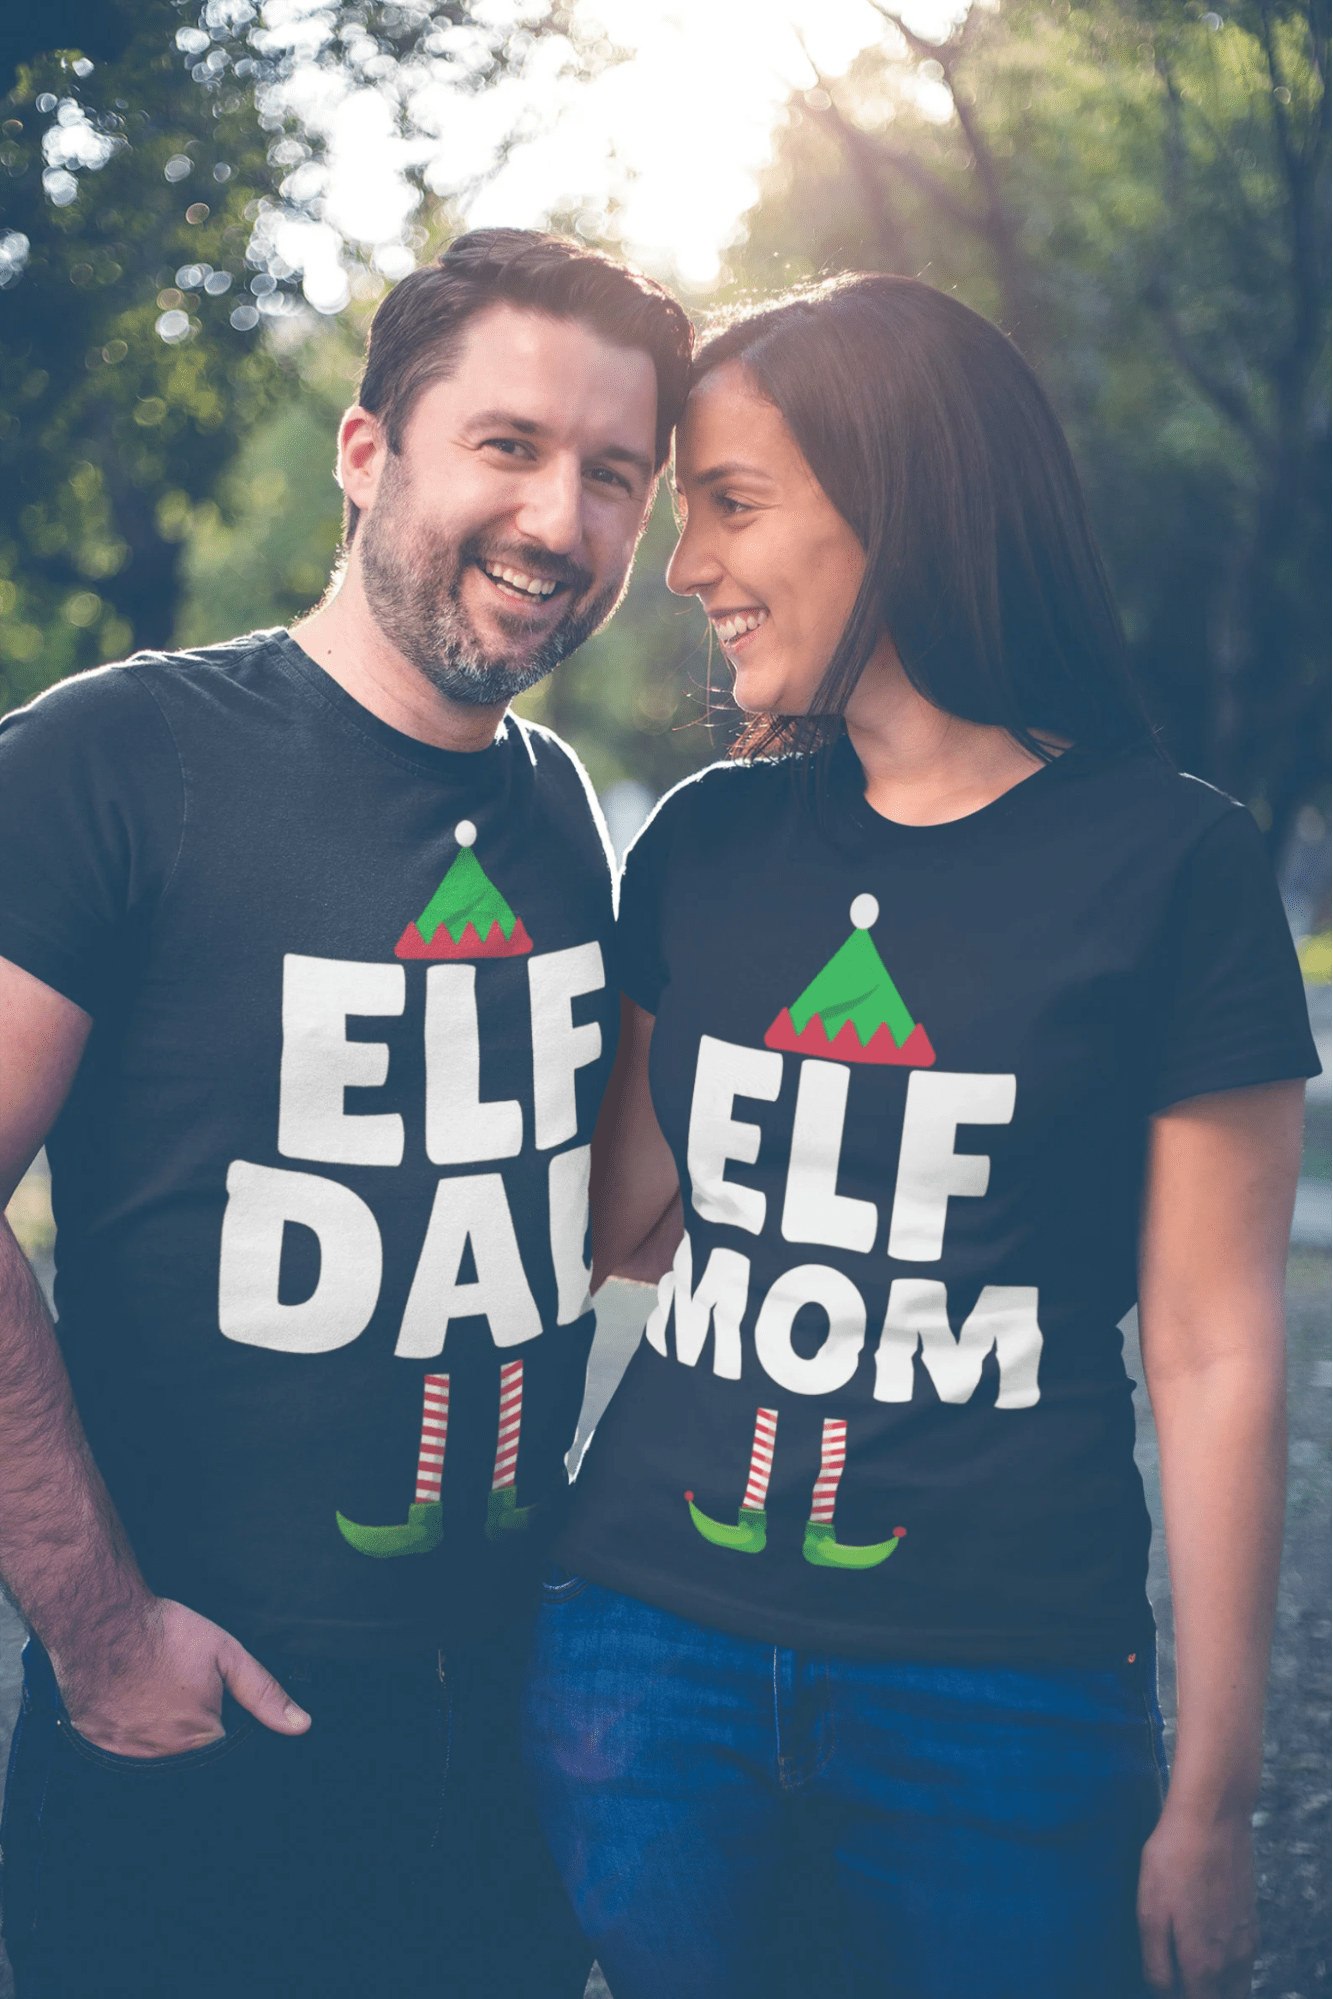 Elf christmas t shirt for couples